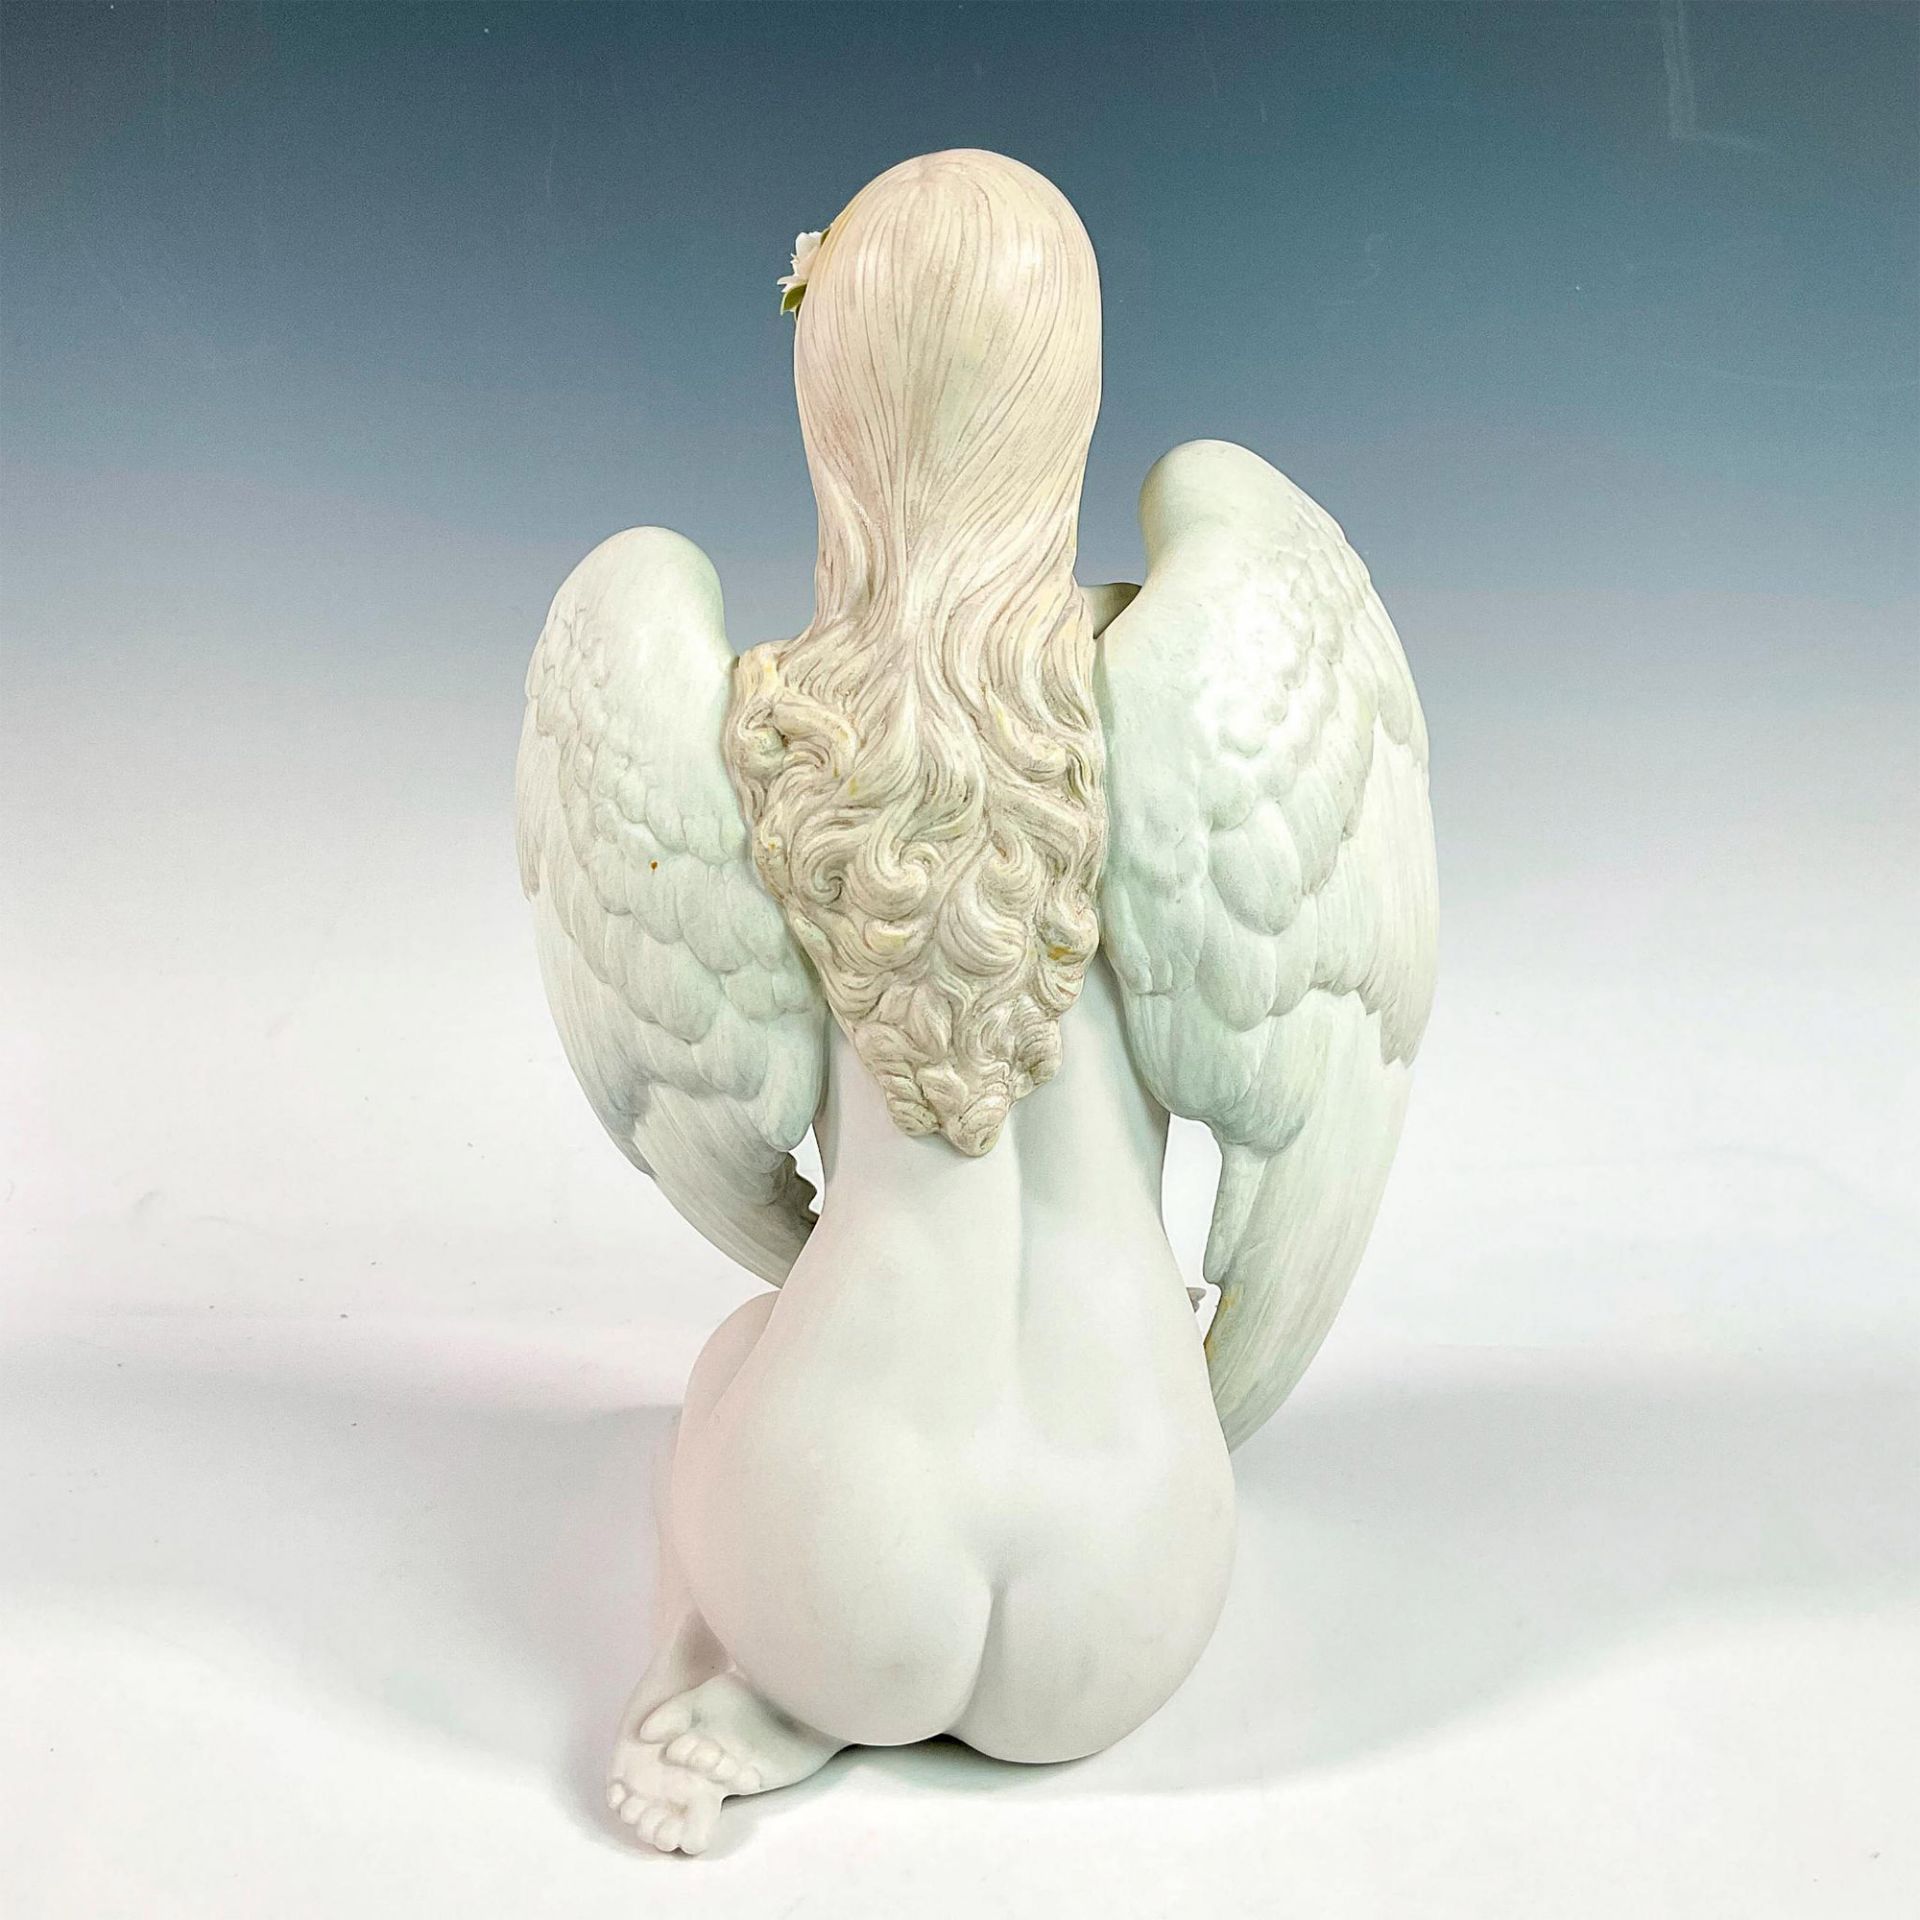 You're My Angel 1011906 Ltd. - Lladro Porcelain Figurine - Image 2 of 3